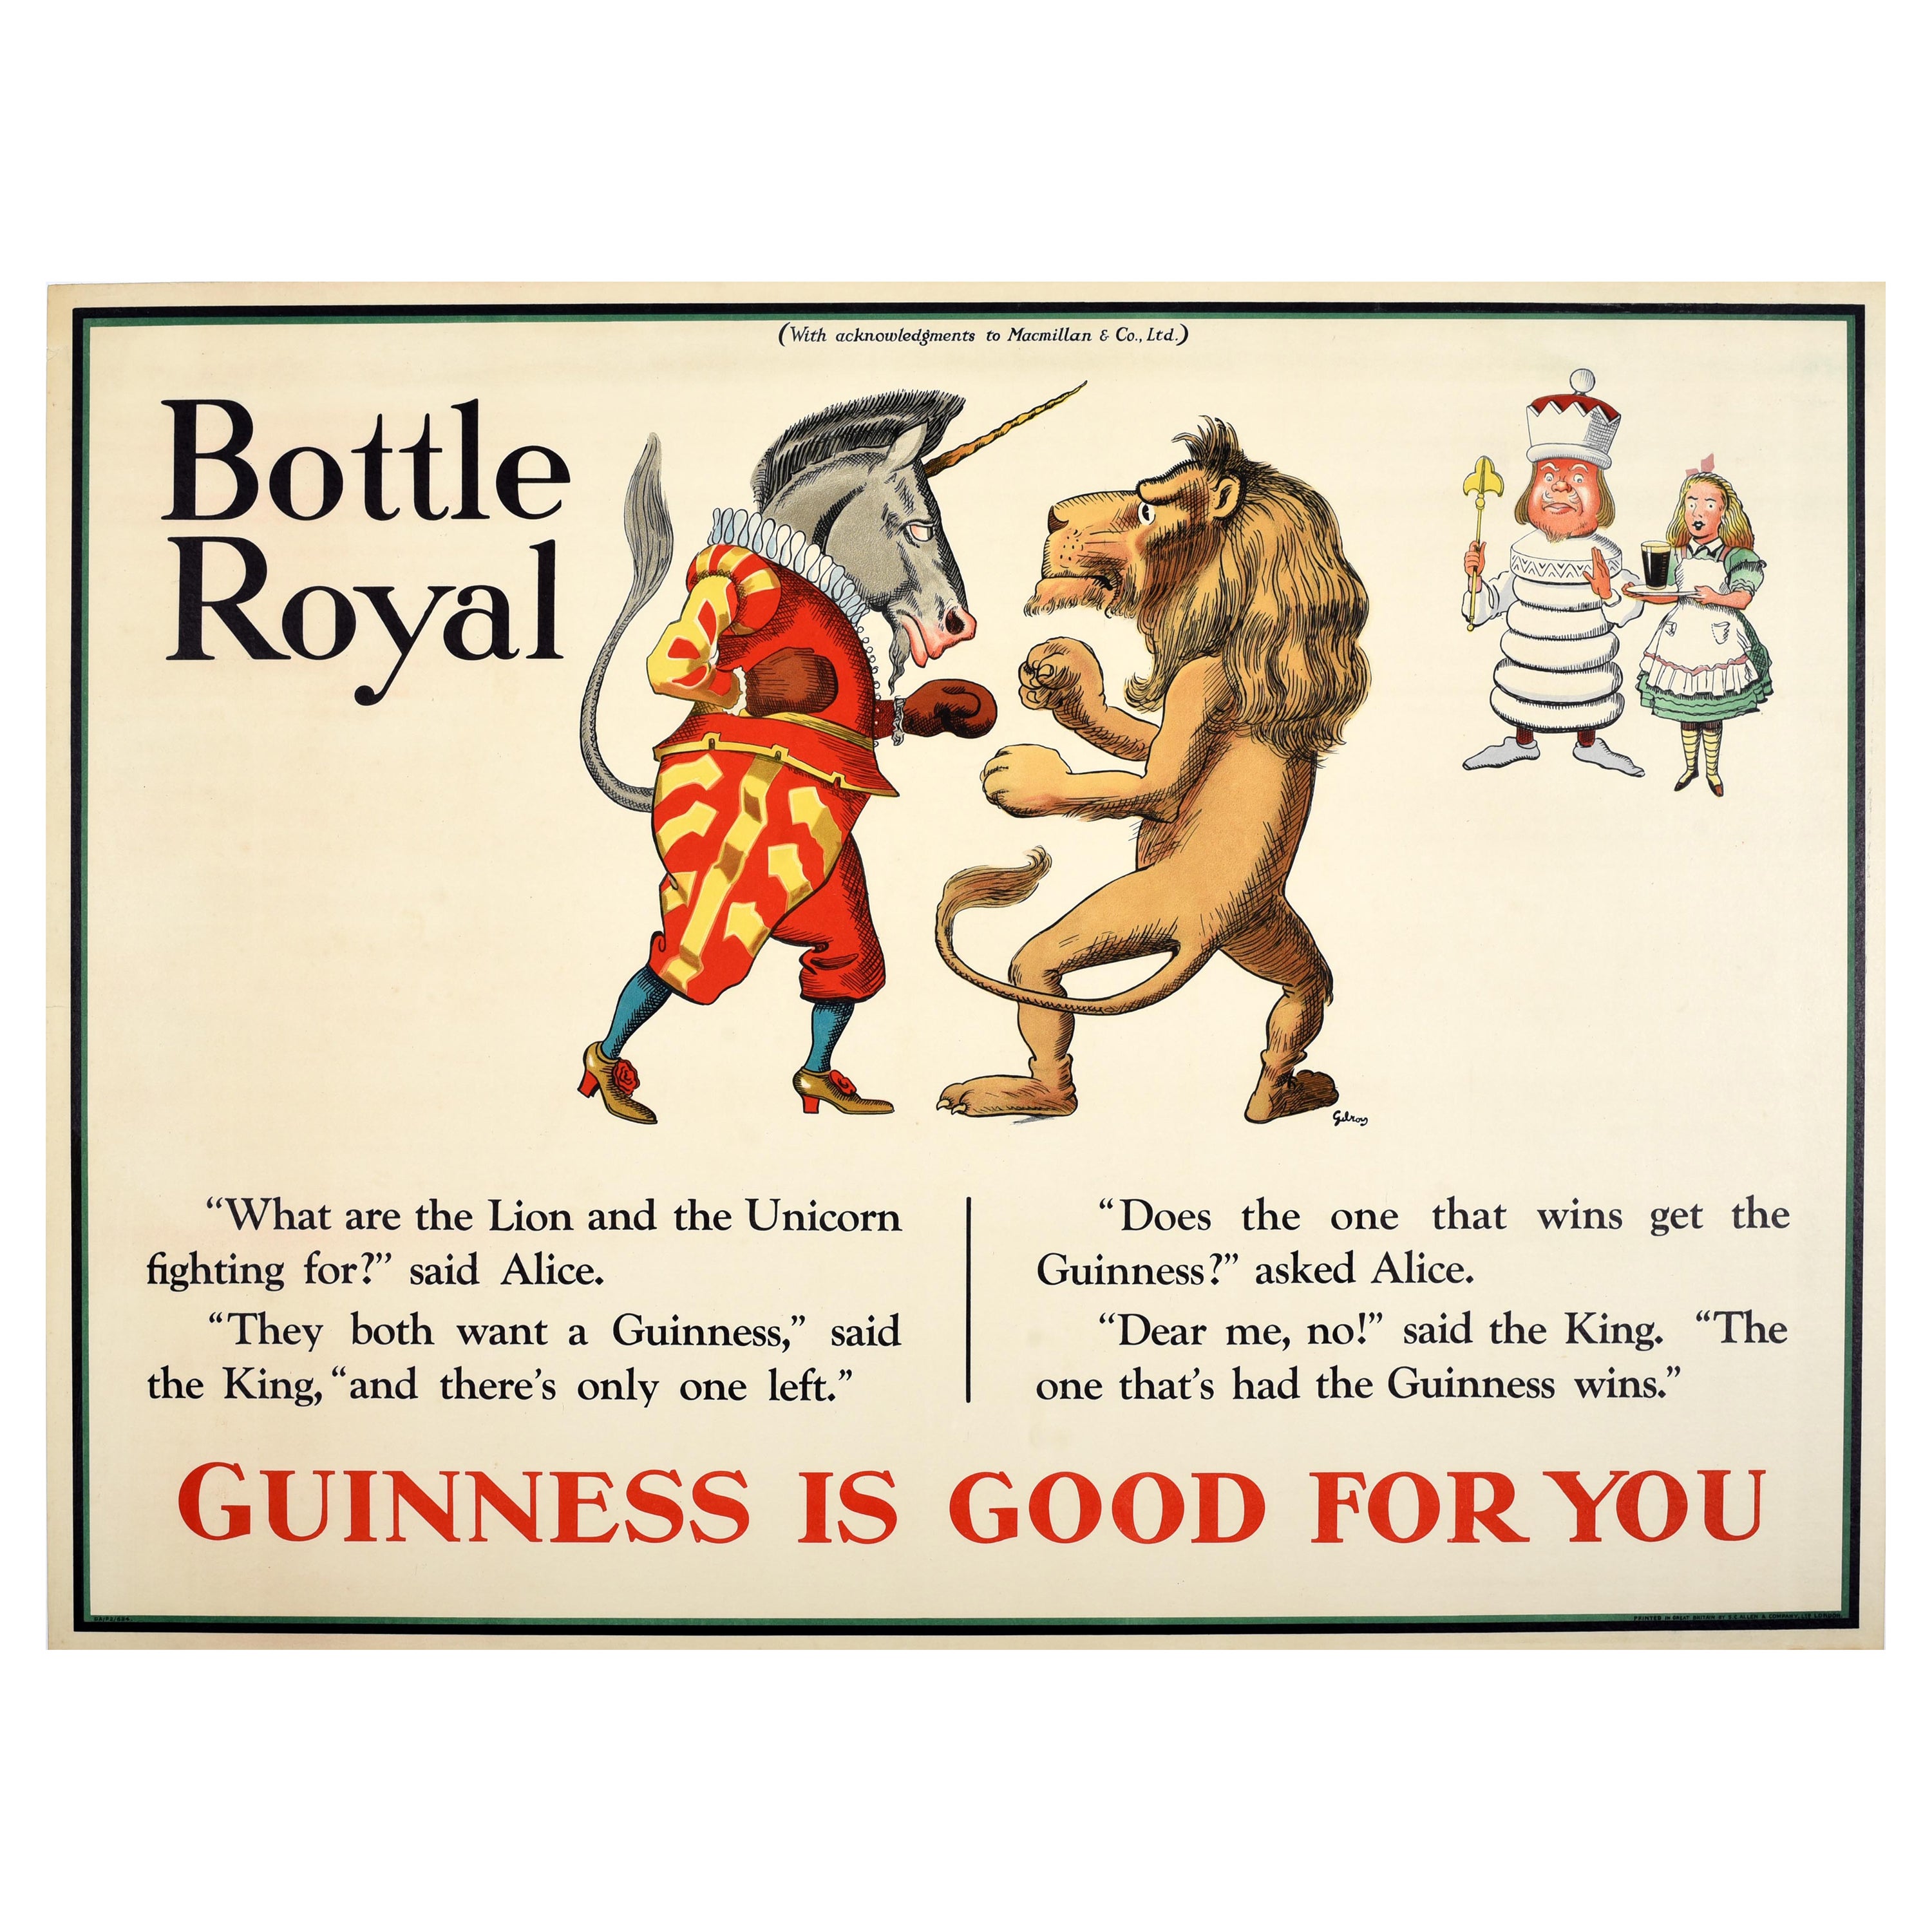 Seltenes Original Vintage Werbeplakat Guinness Bottle Royal John Gilroy